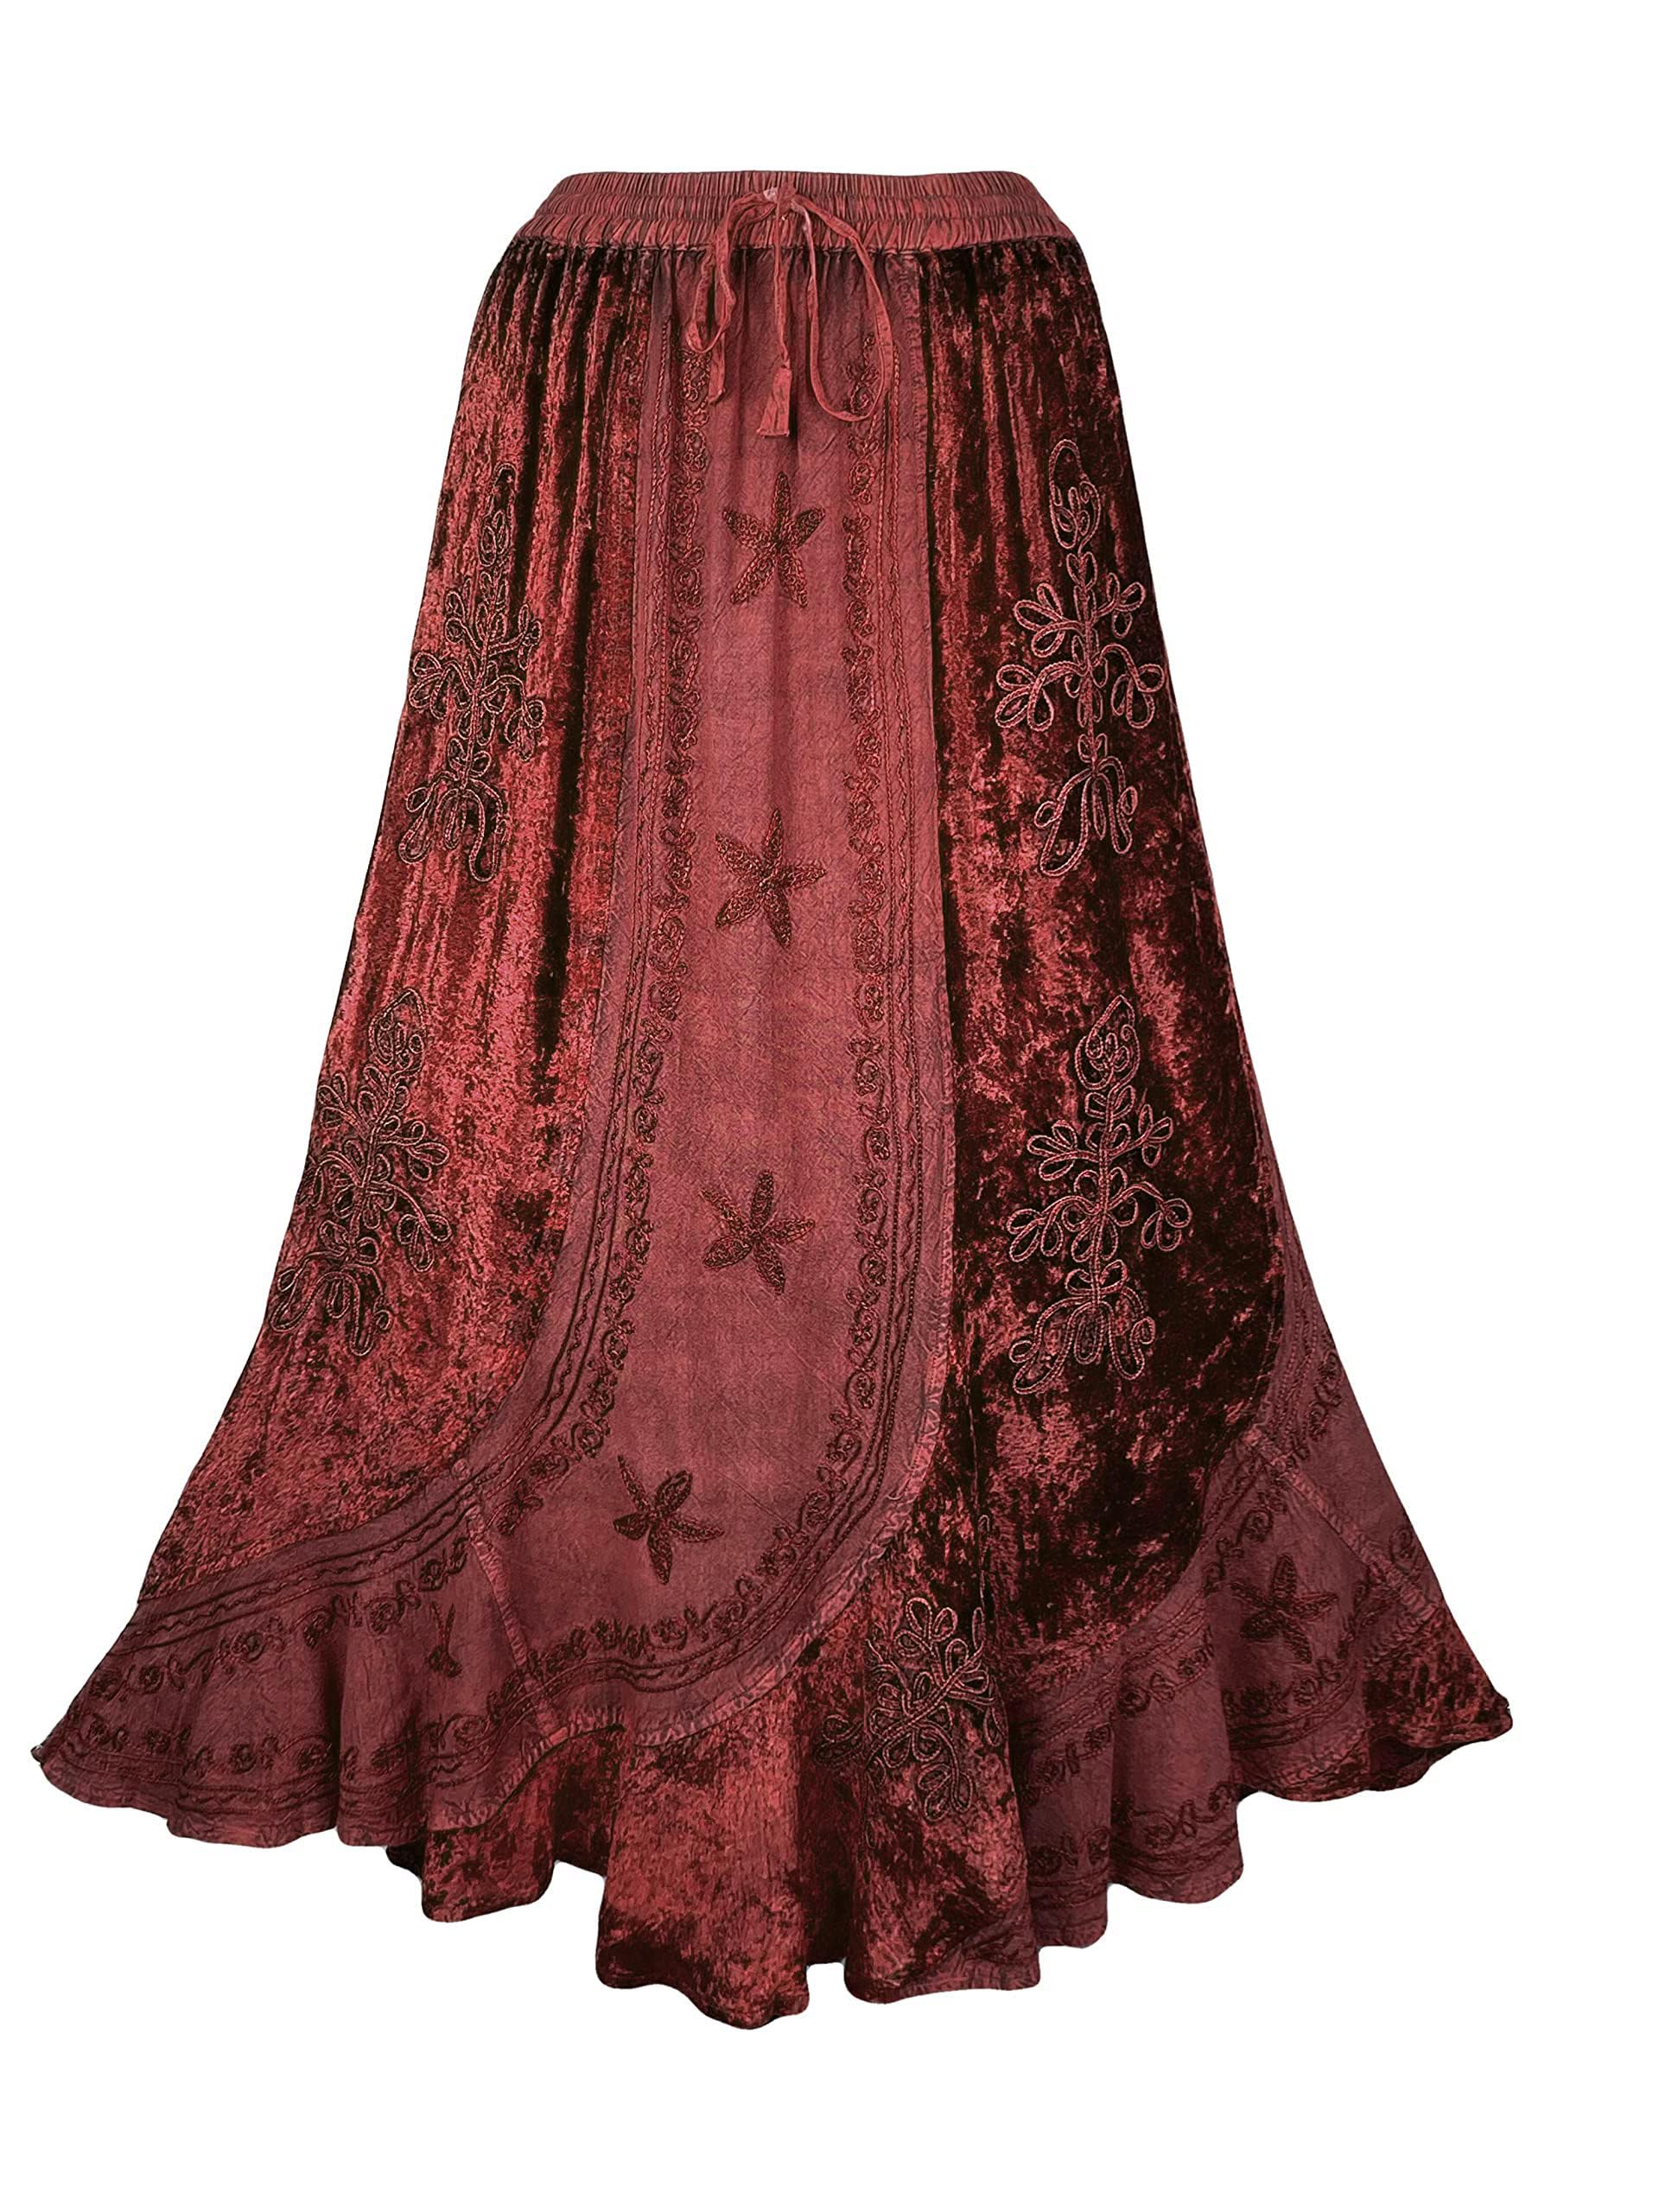 Agan Traders Women's Long Rayon Velvet High Waistband Boho Vintage Embroidered Maxi Skirt Regular Plus Size 2X 3X